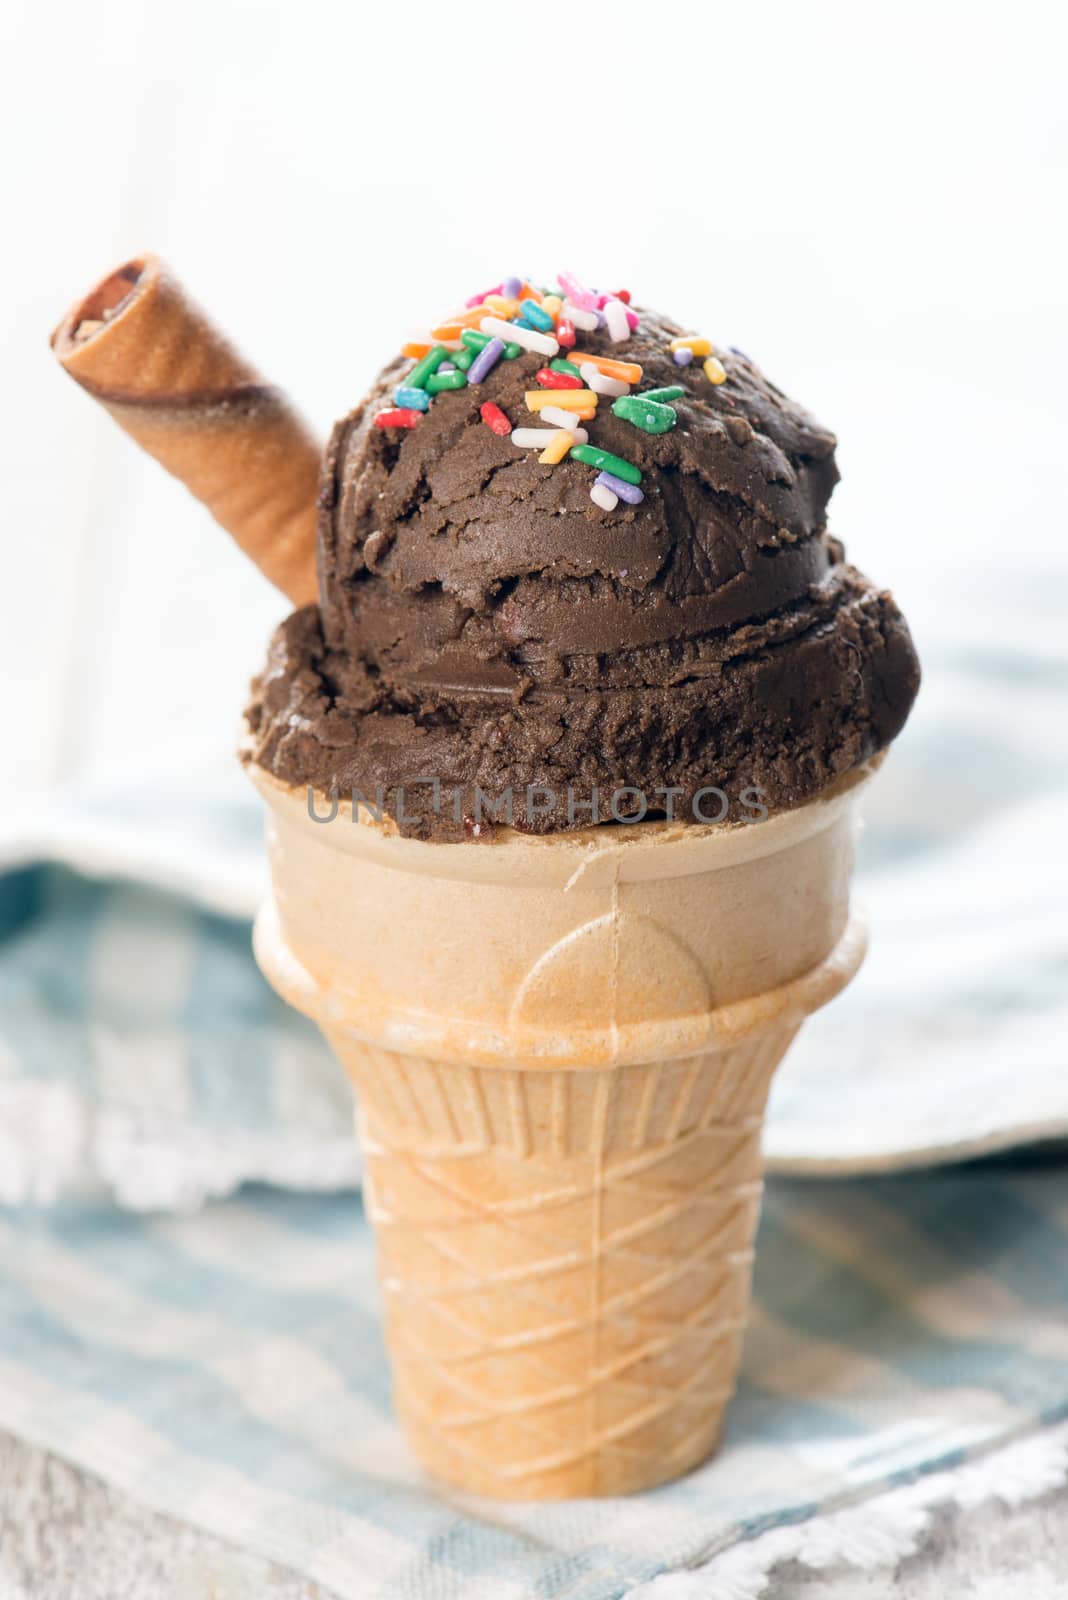 Chocolate ice cream cone  by szefei